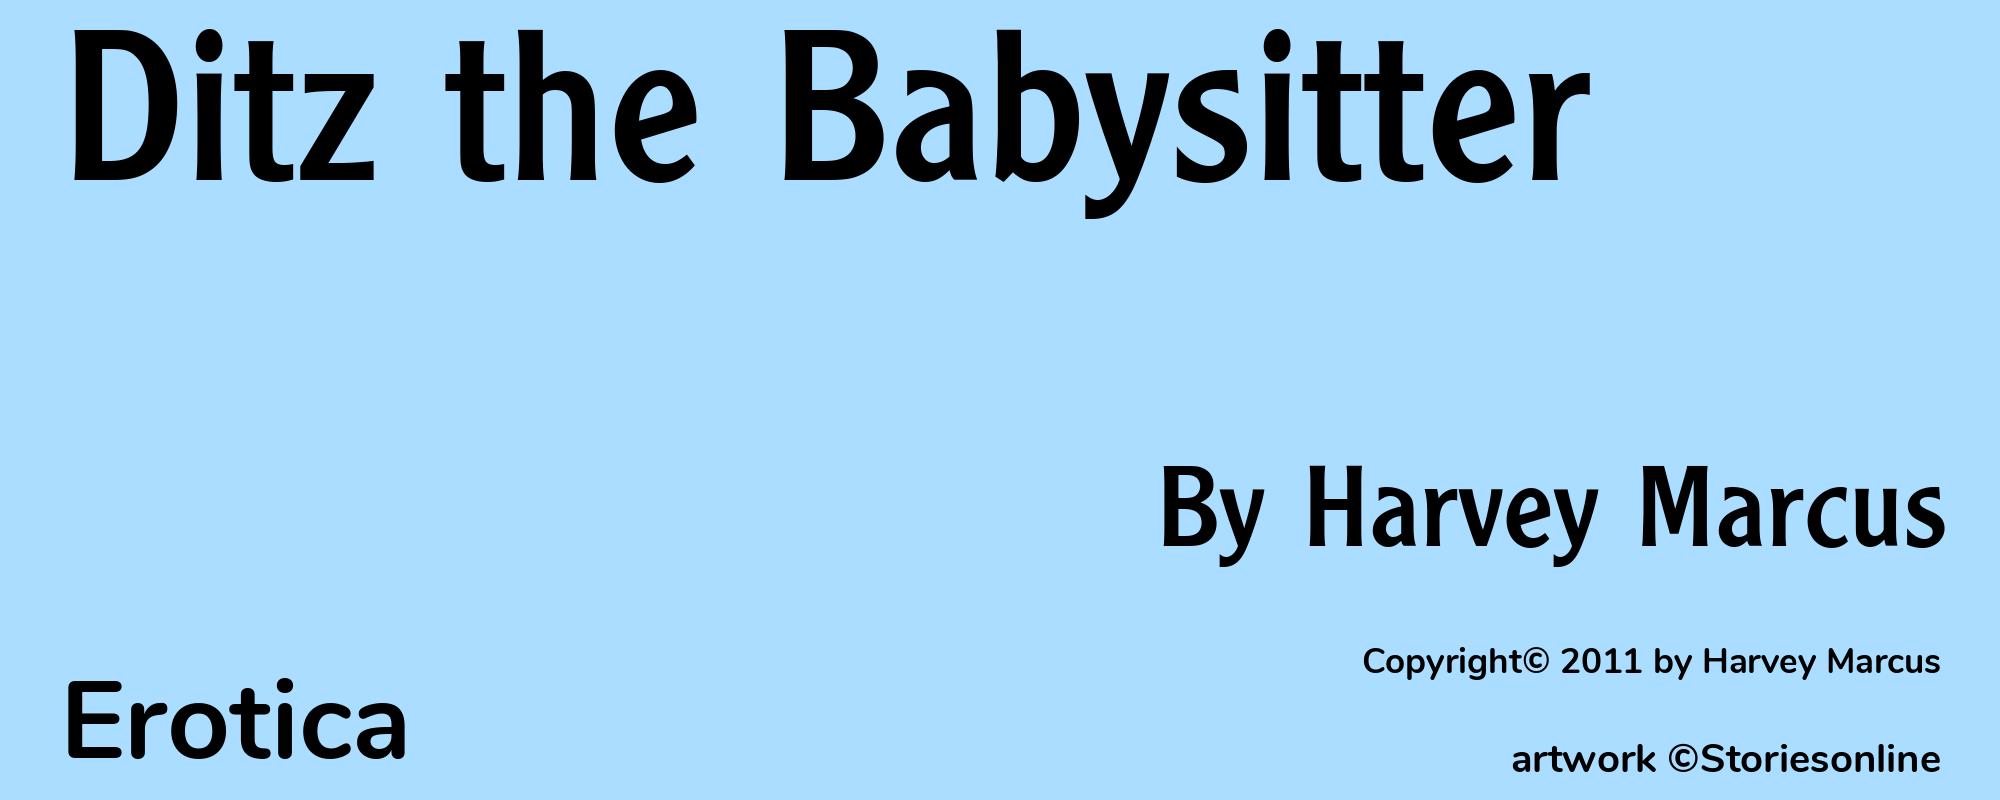 Ditz the Babysitter - Cover